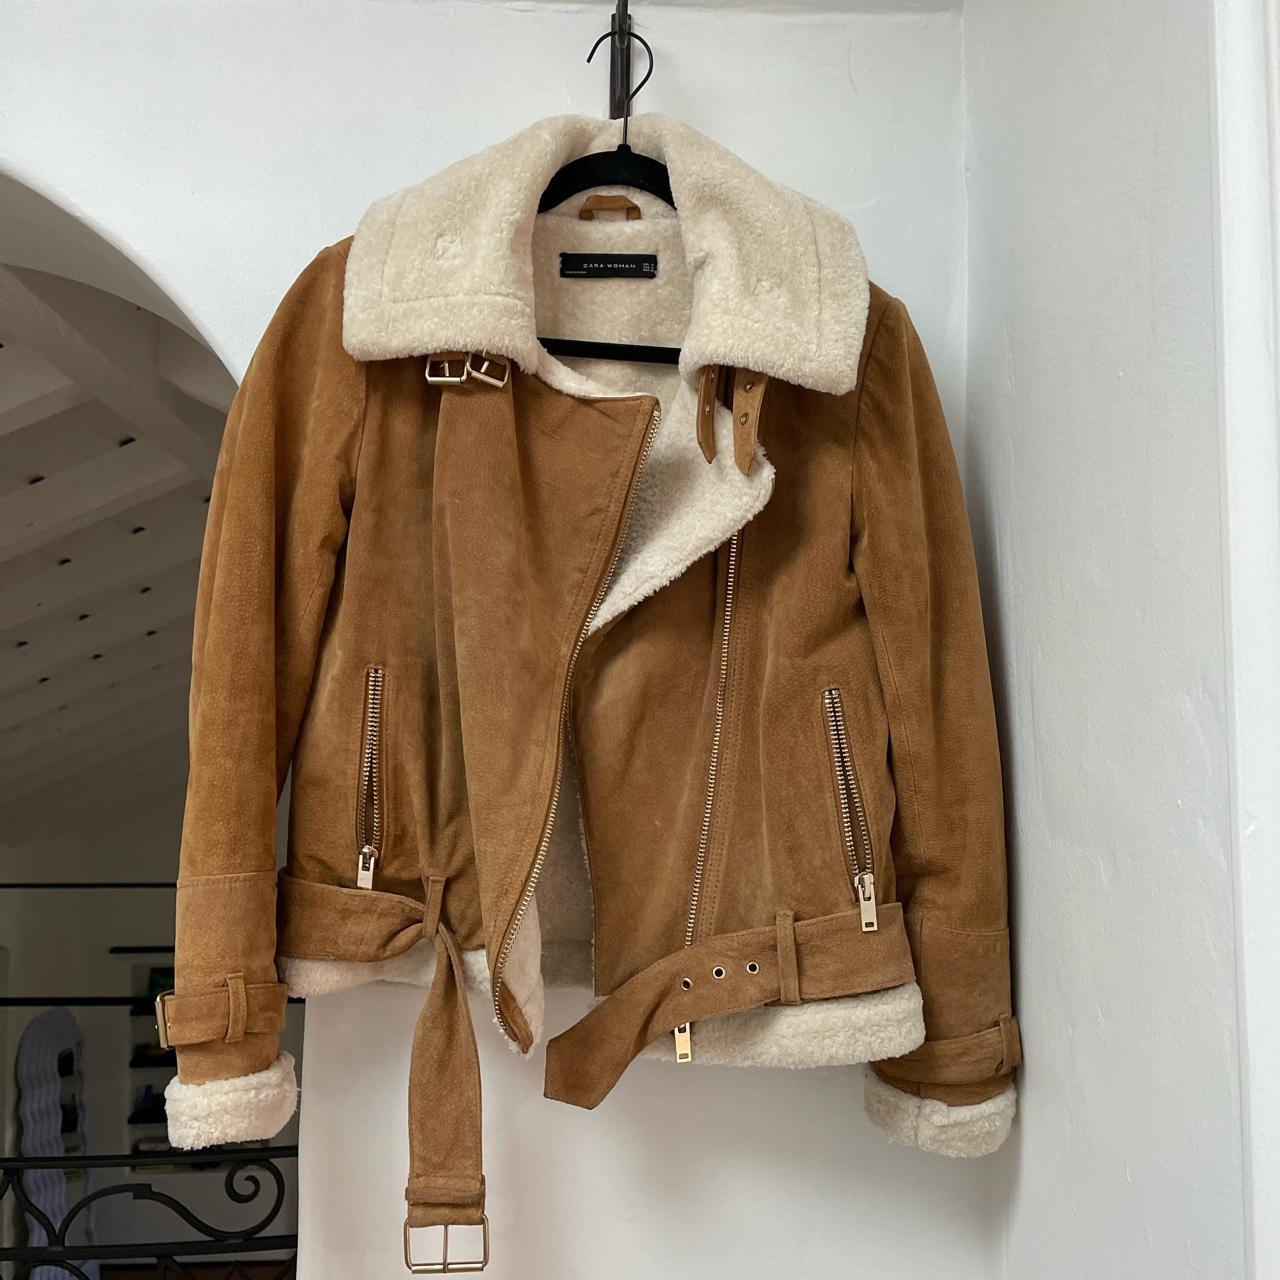 Zara sherpa jacket with gold hardware Size... - Depop